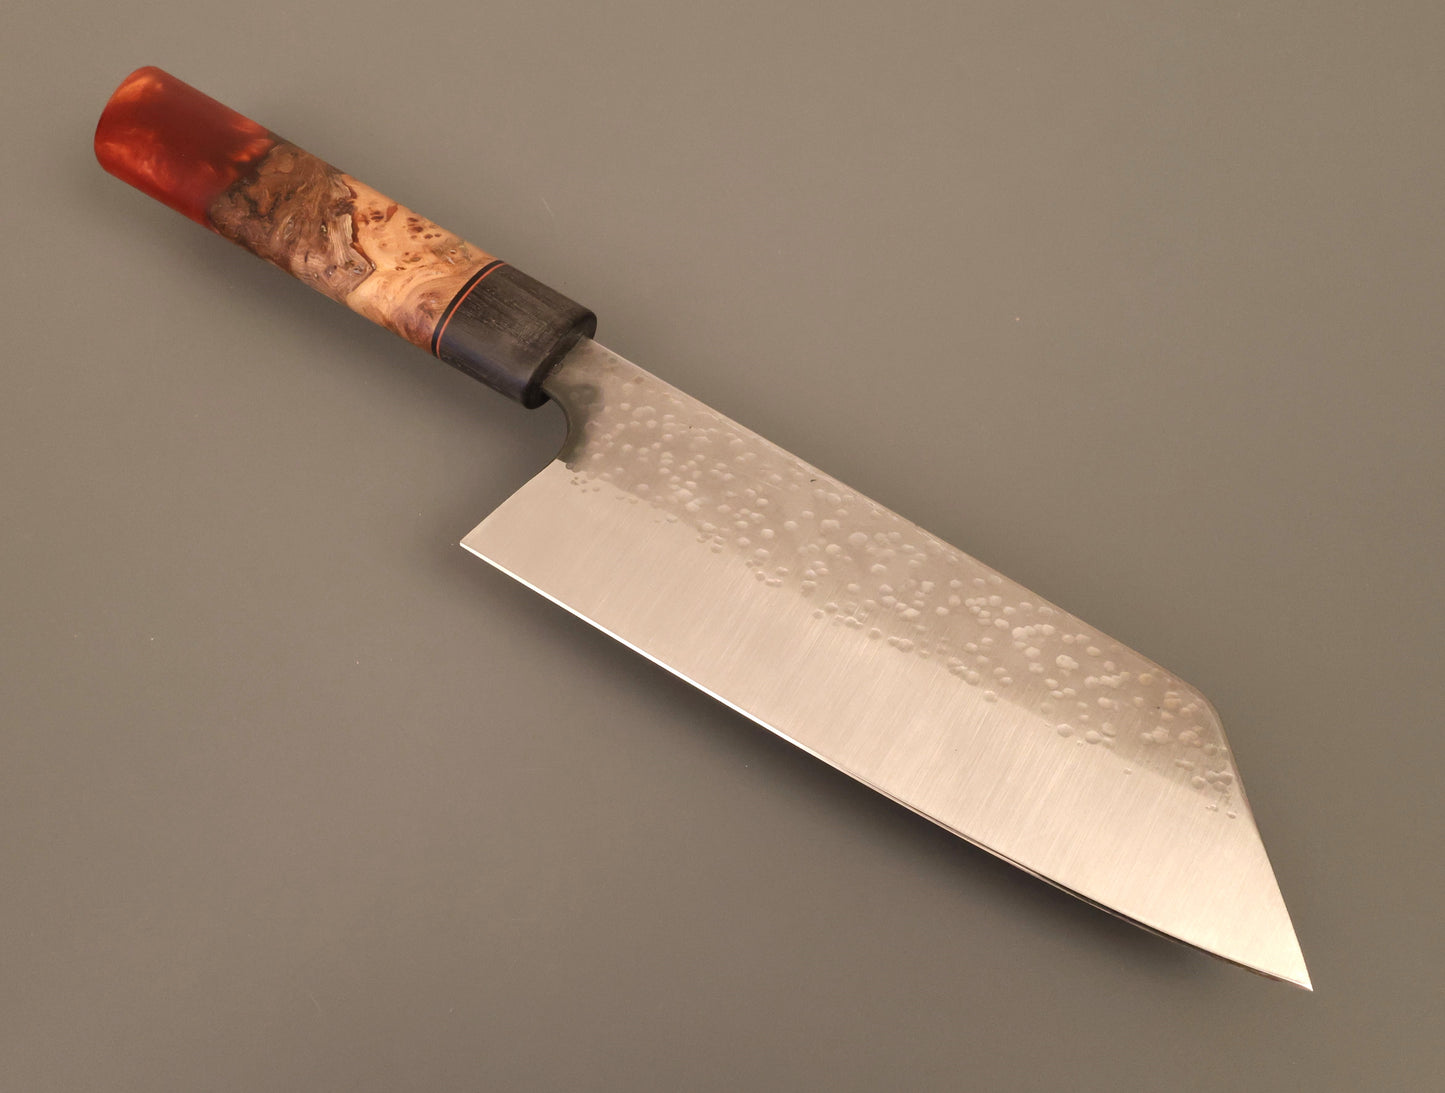 Bunka kitchen knife with wood and orange resin hybrid handle